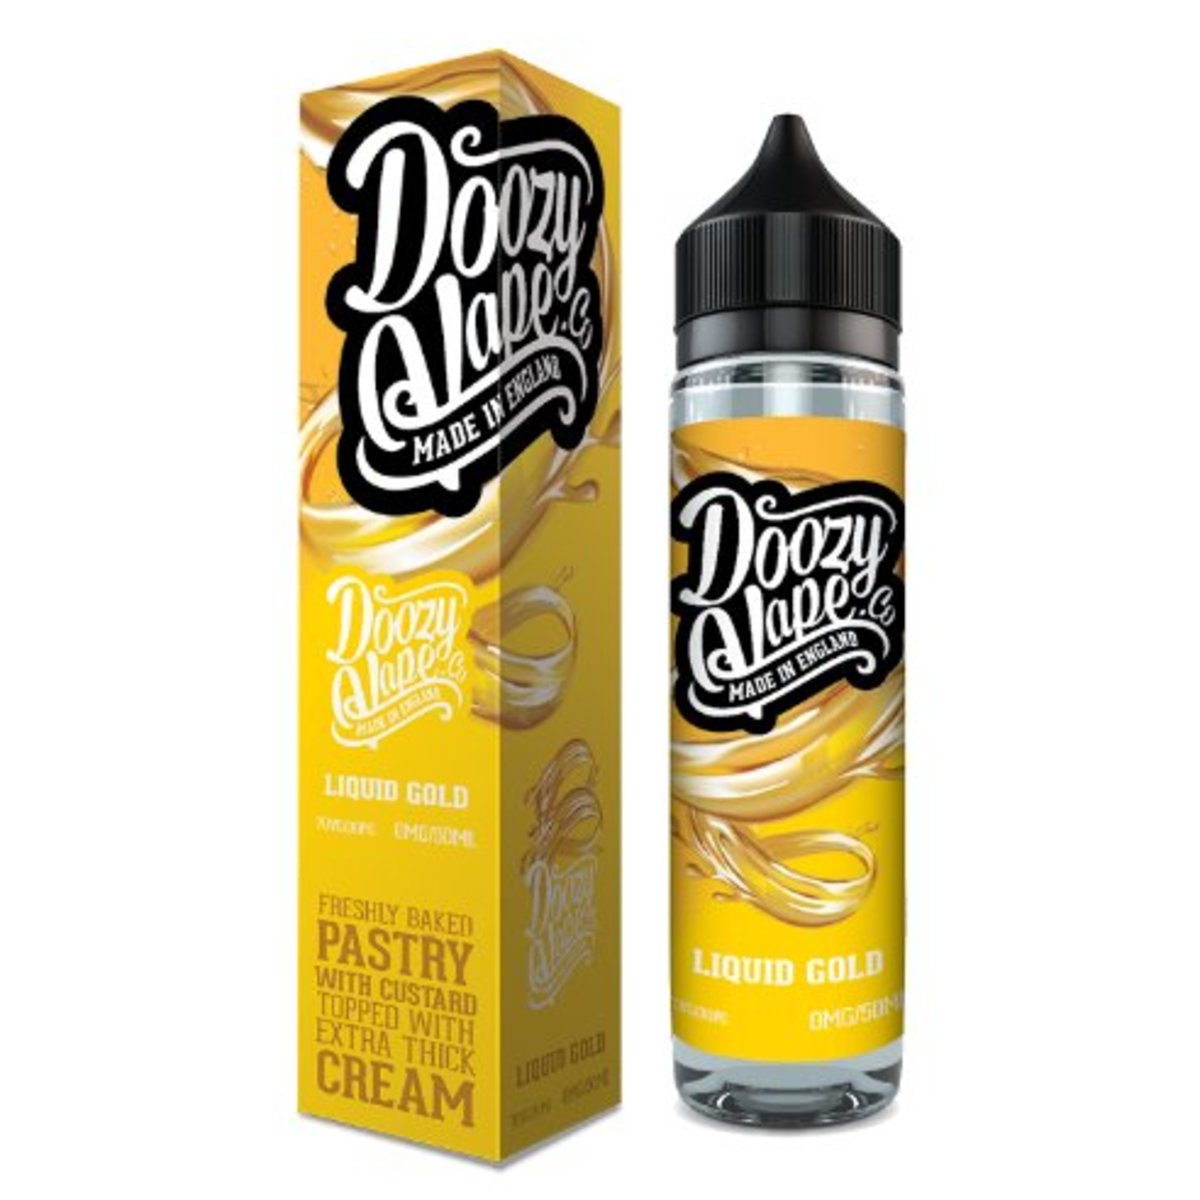 Bouwen op Mail Knorretje Doozy Vape Liquid Gold 50ml E-Liquid Shortfill | Electronic Cigarette Co |  Electronic Cigarette Co.